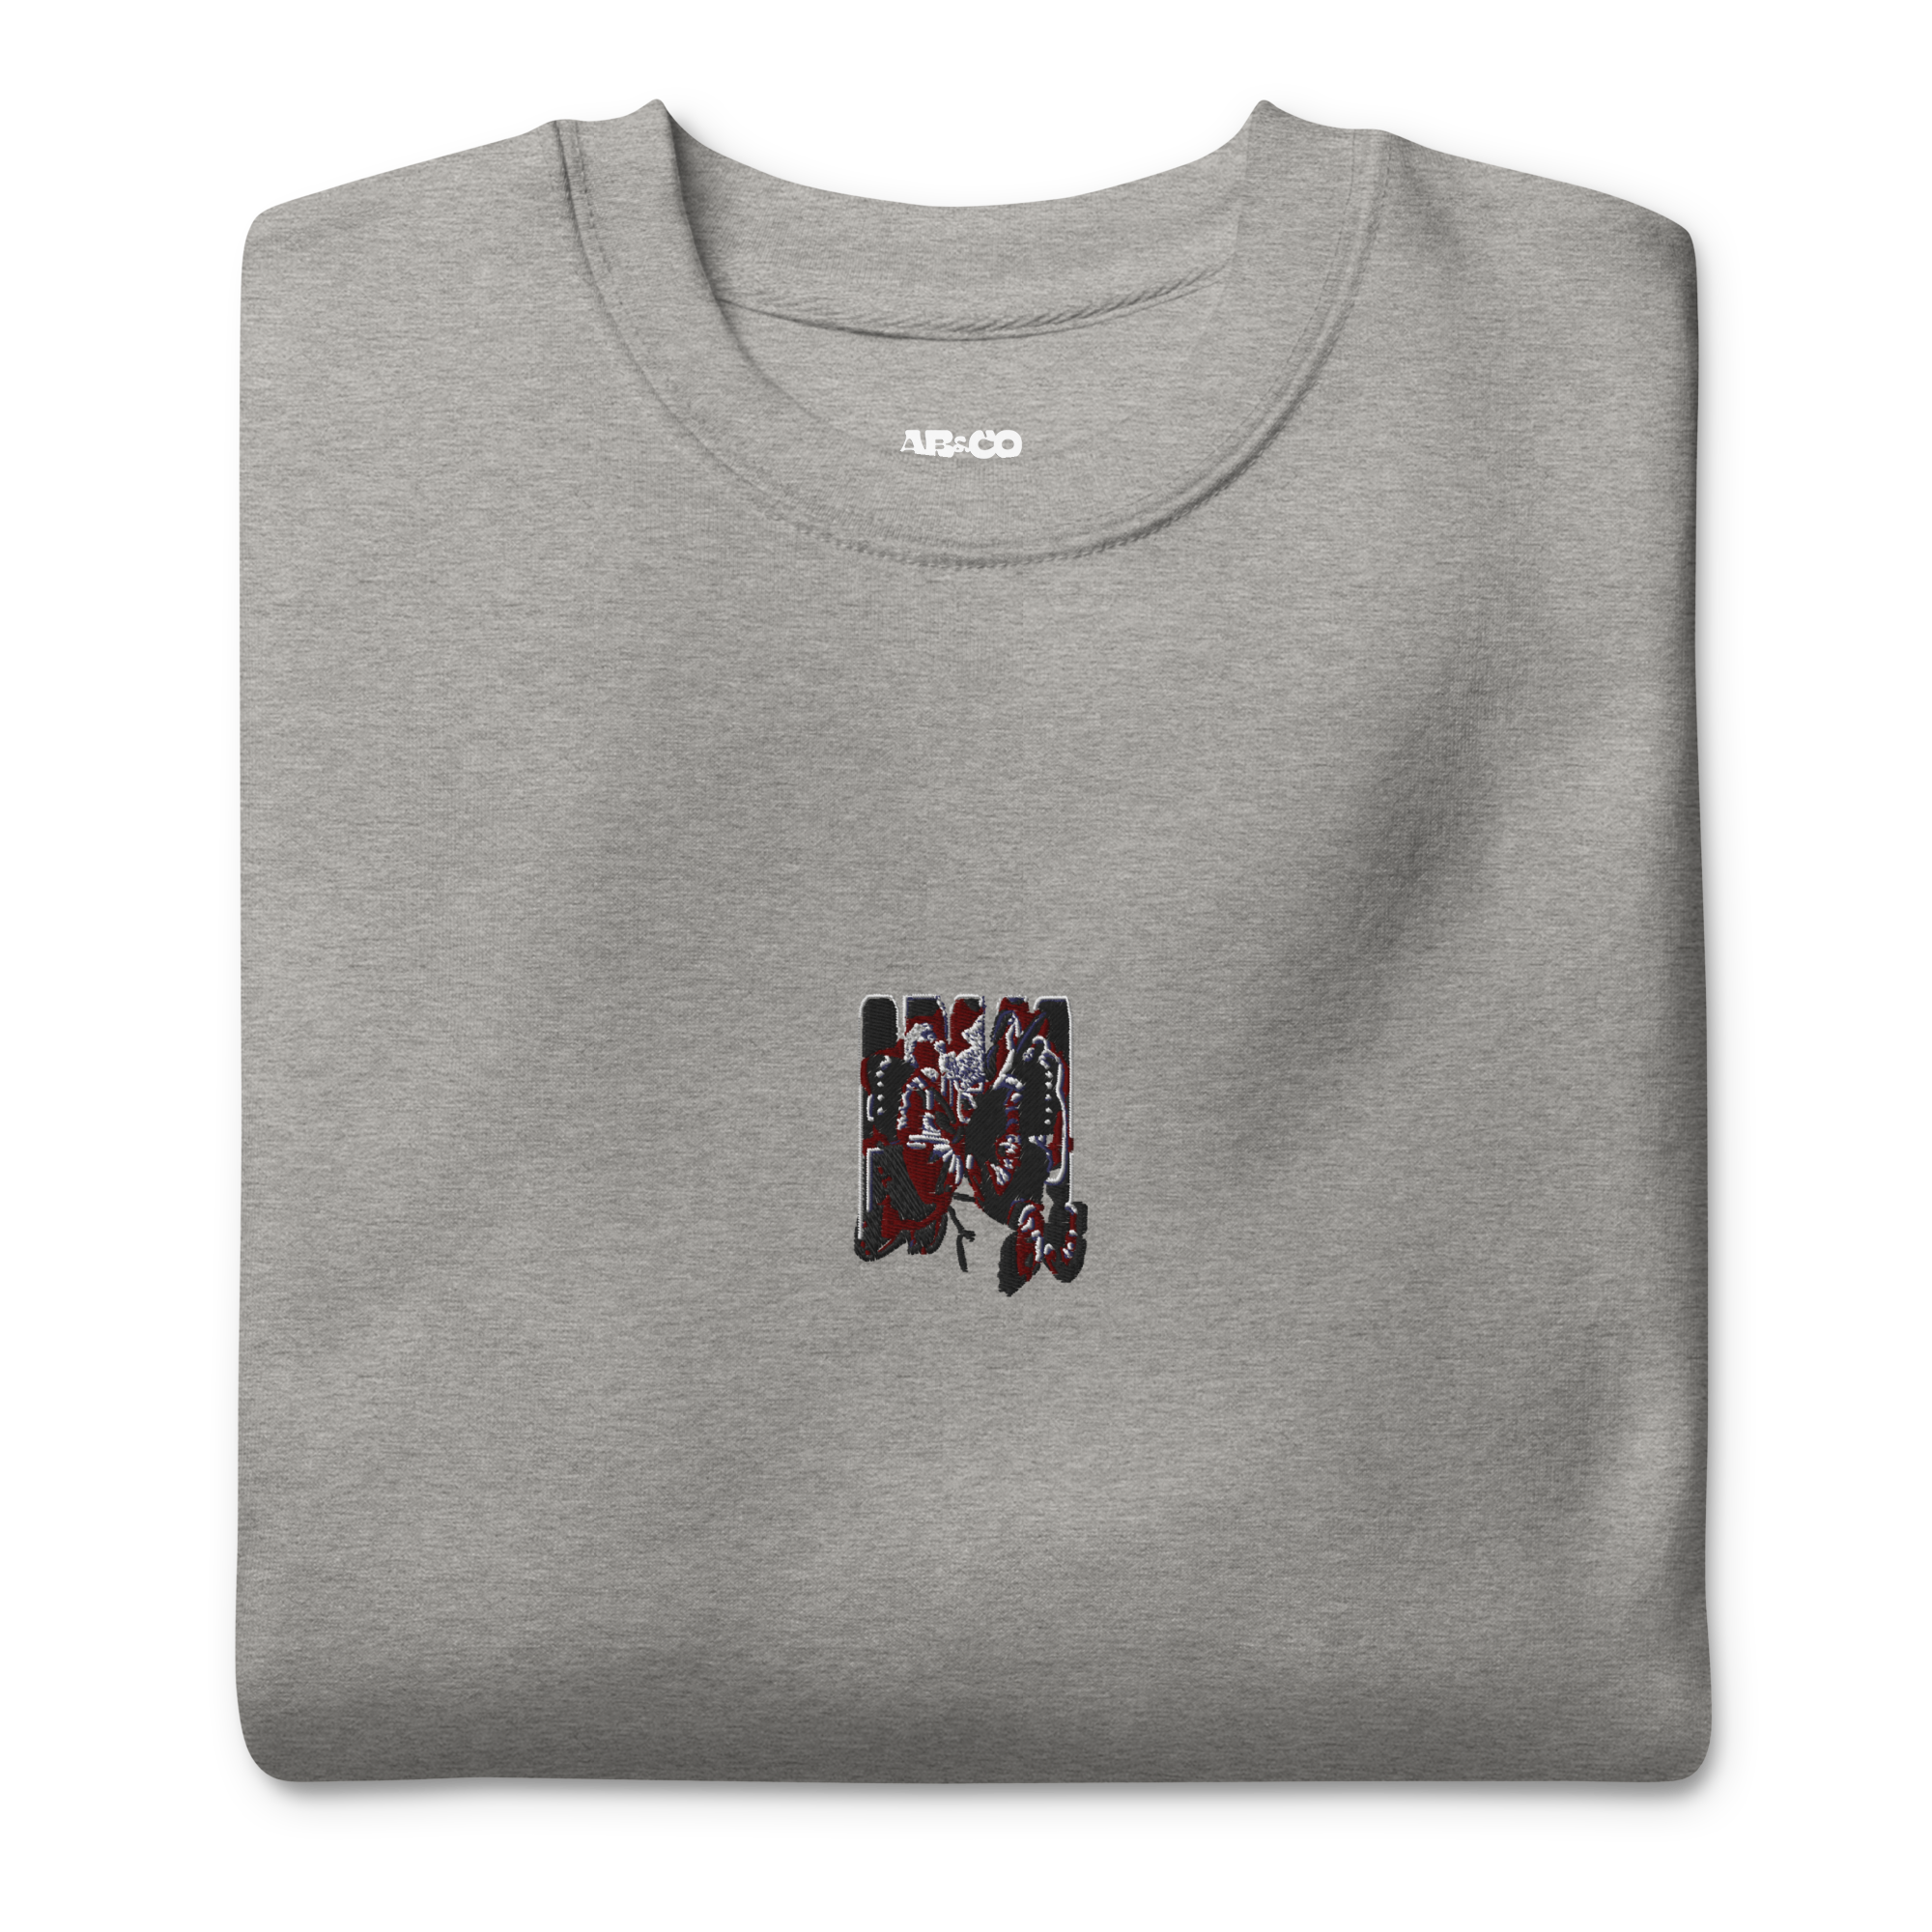 AB&CO Graphic Embroidered Premium Sweatshirt